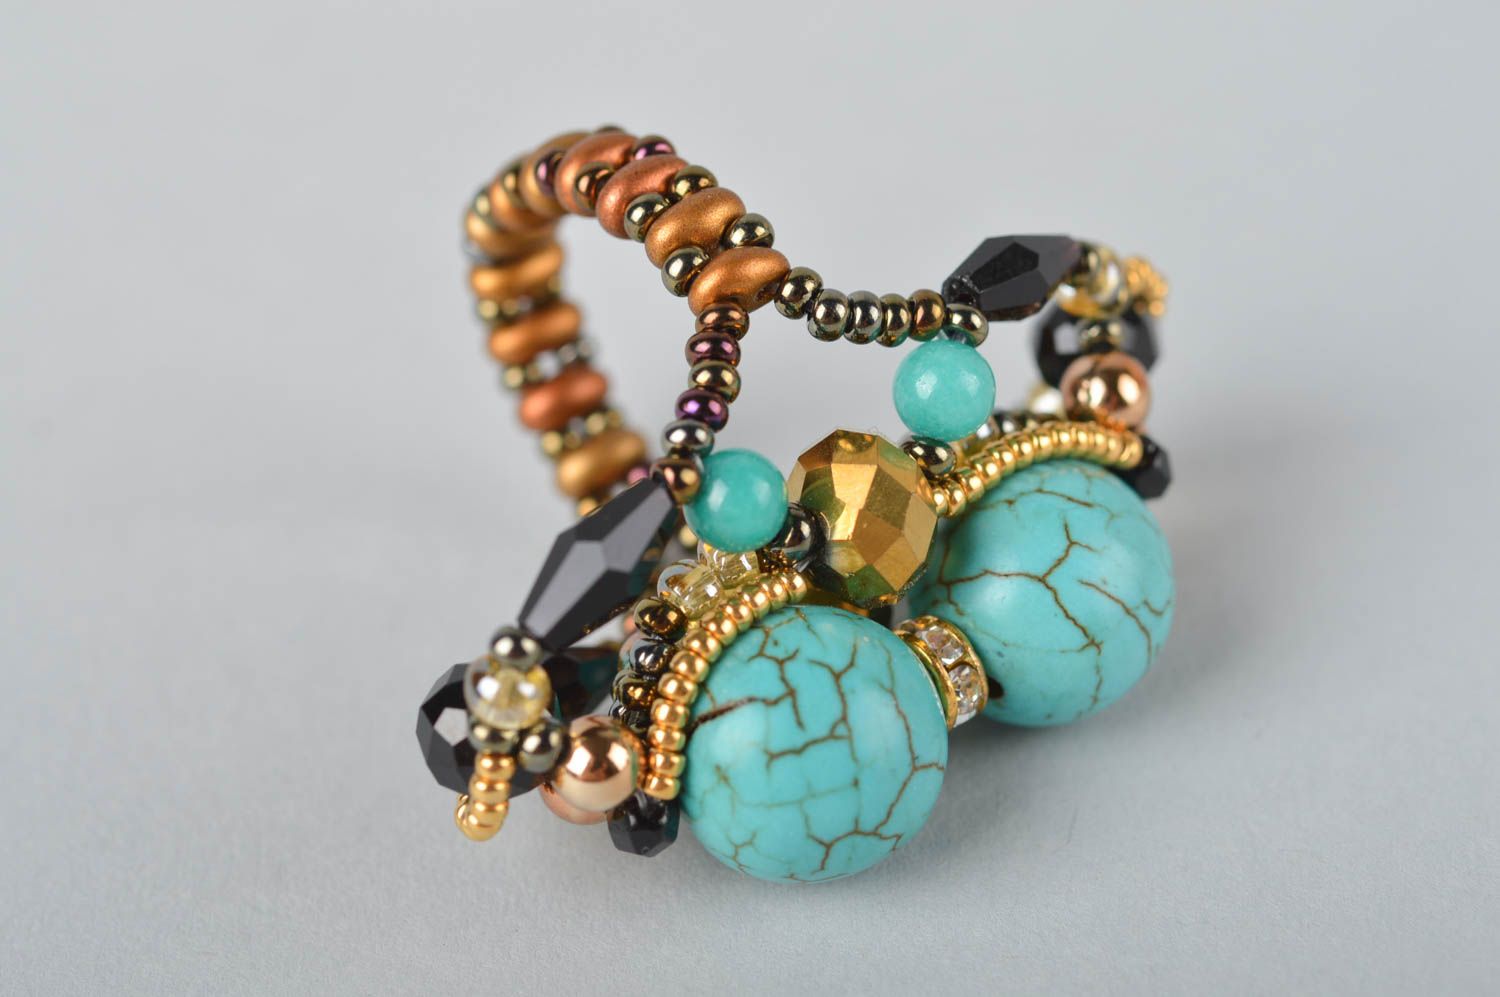 Unusual handmade beaded ring design bead ring artisan jewelry designs gift ideas photo 3